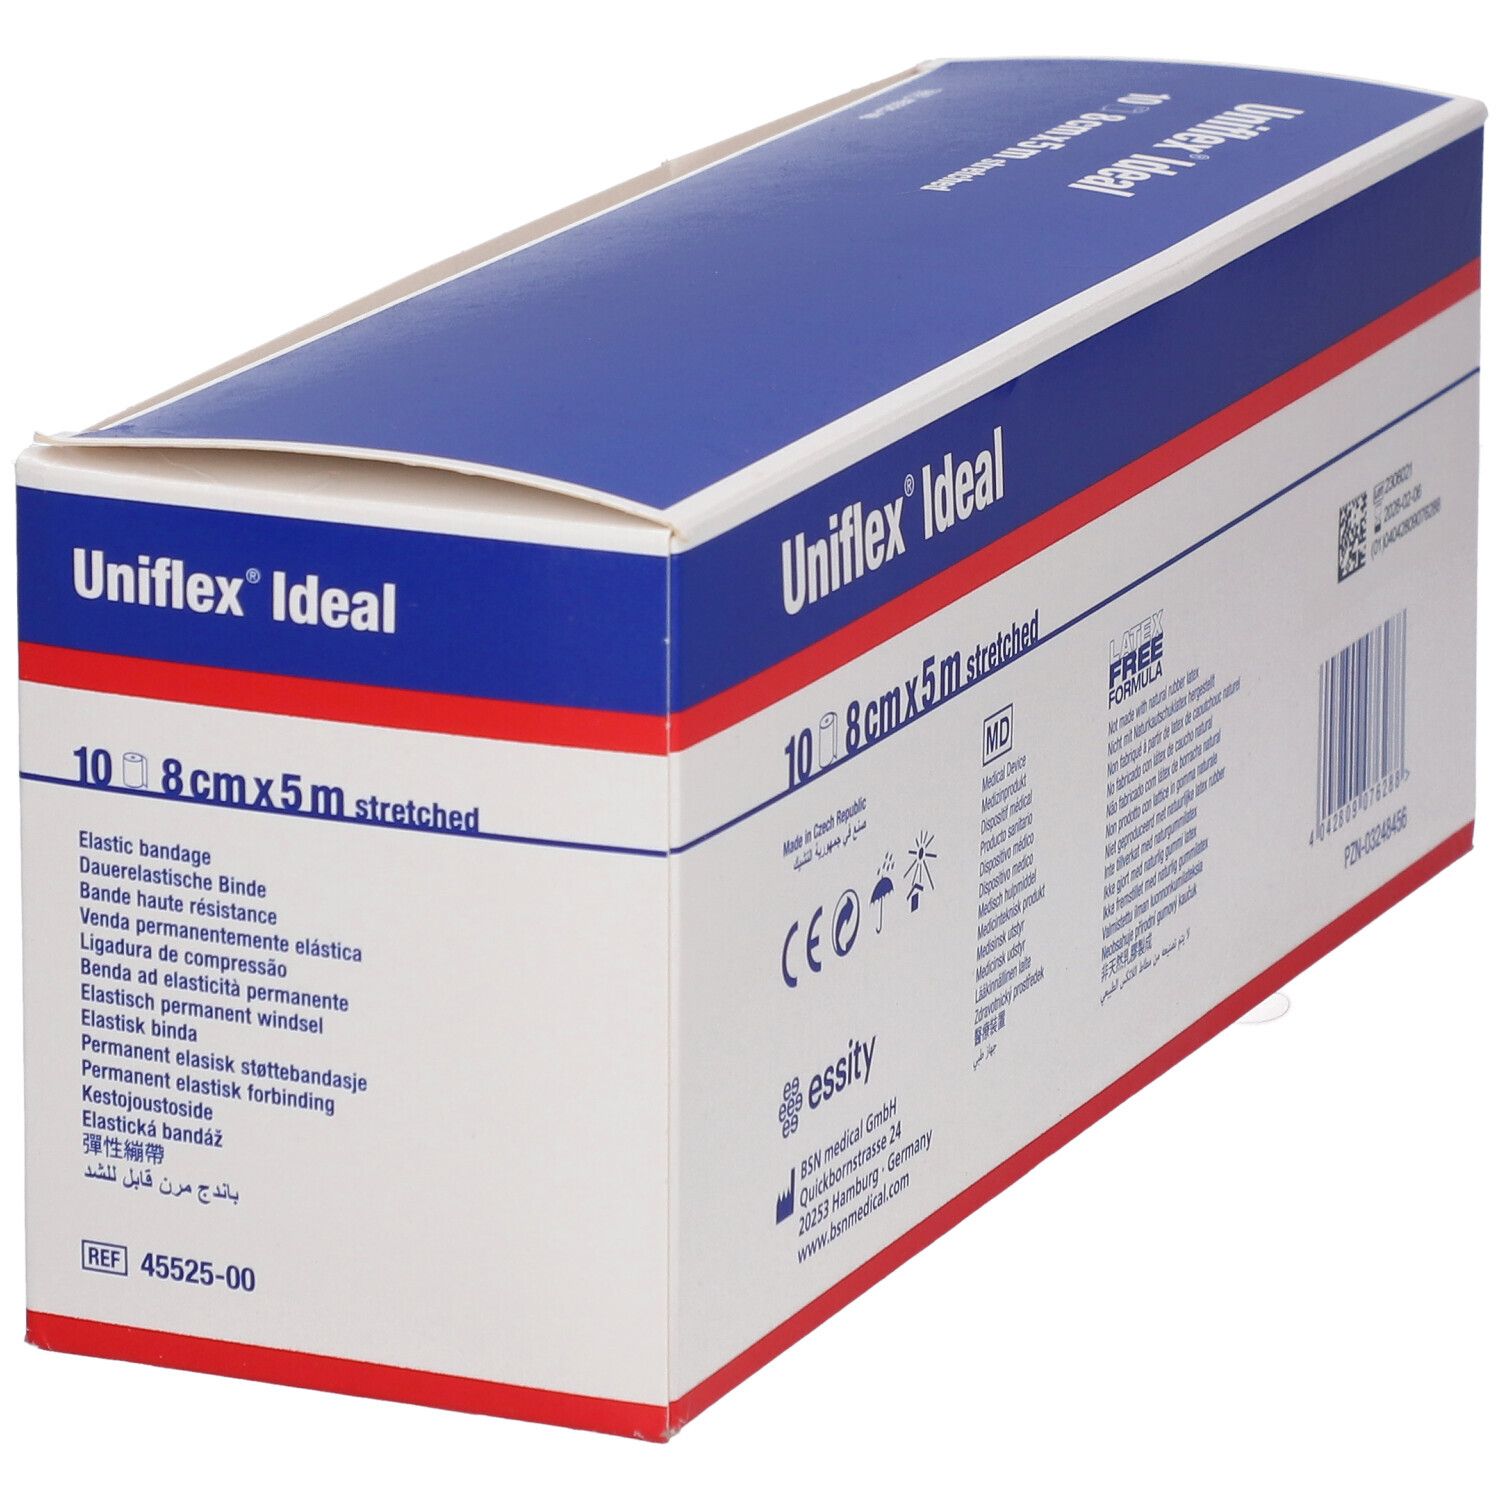 Uniflex® Ideal 8 cm x 5 m weiß